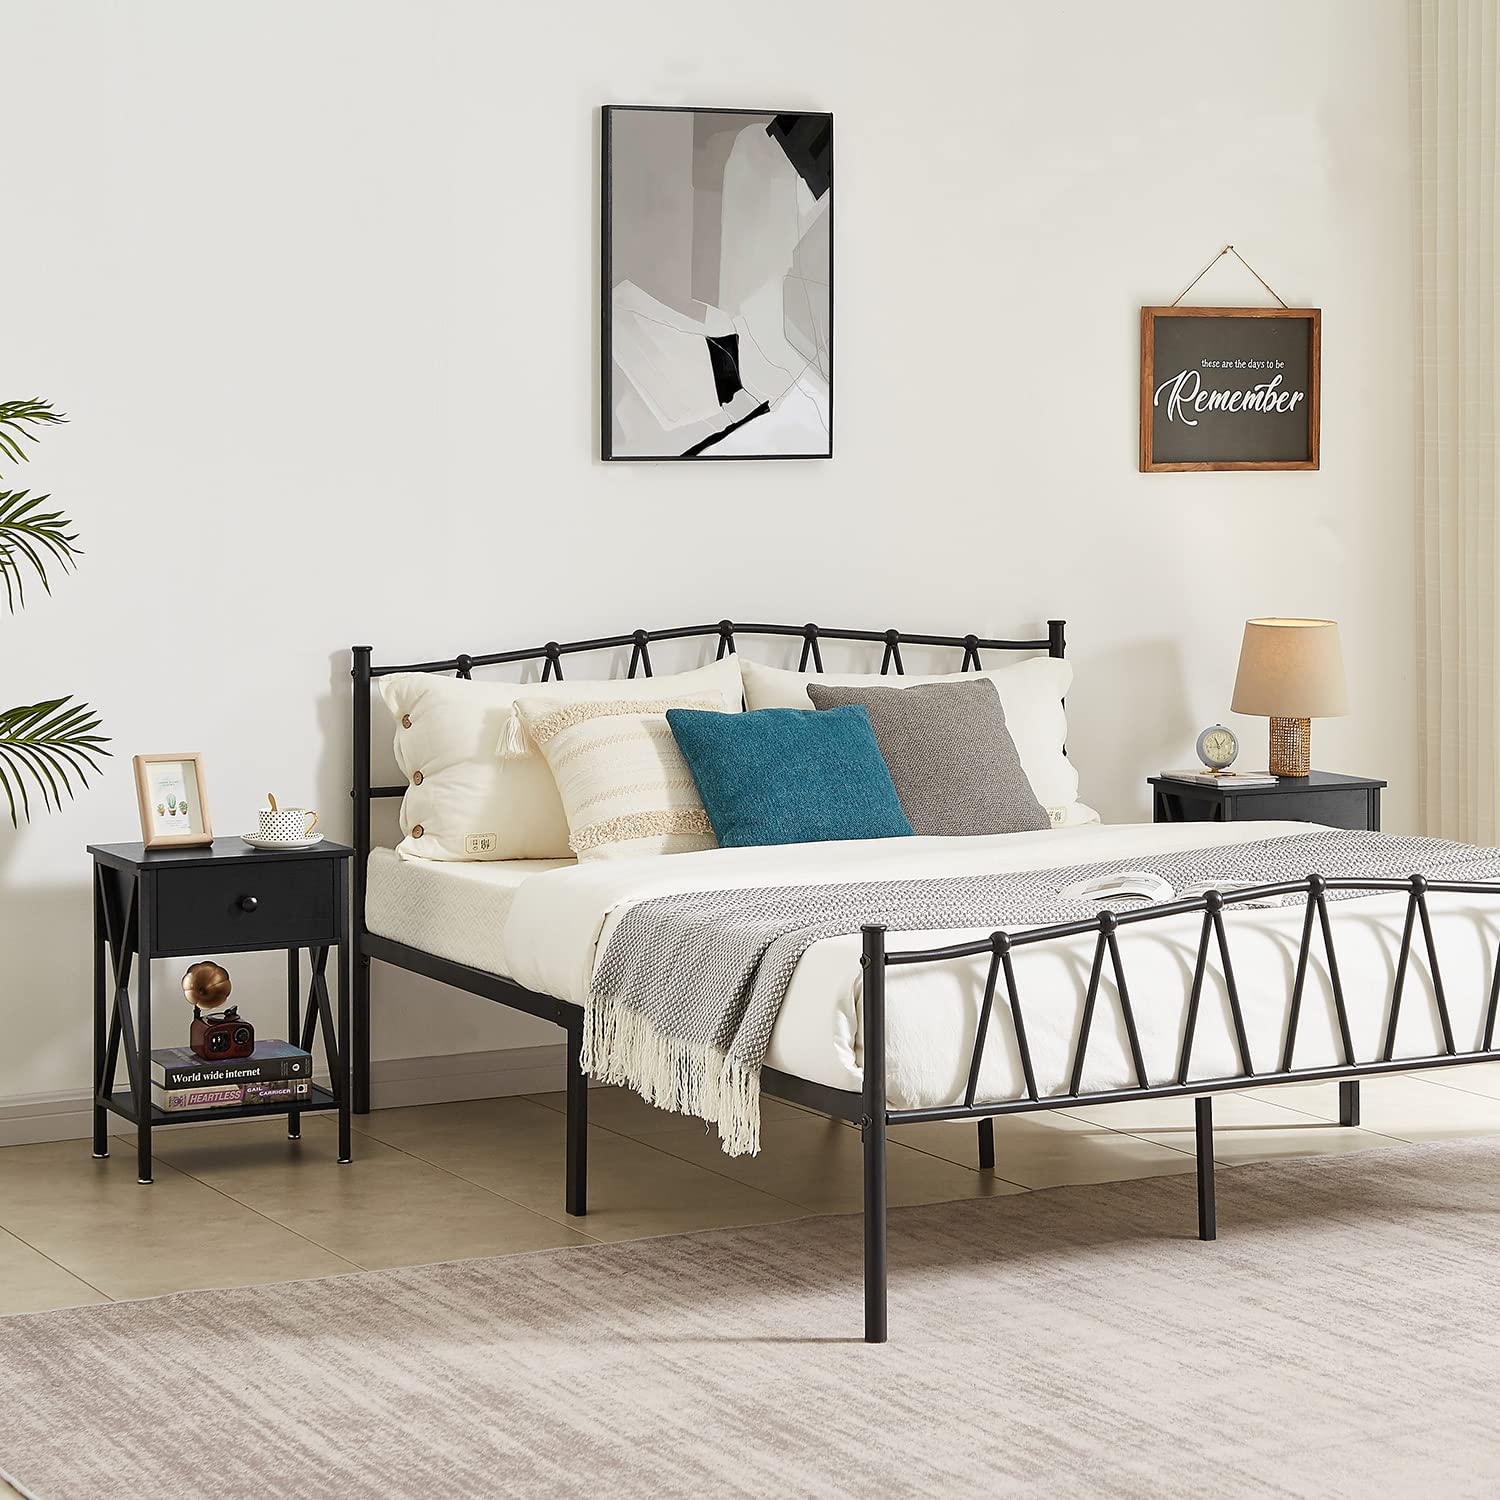 VECELO Versatile Nightstands X-Design Side End Table with Bin Drawer for Living Room Bedroom